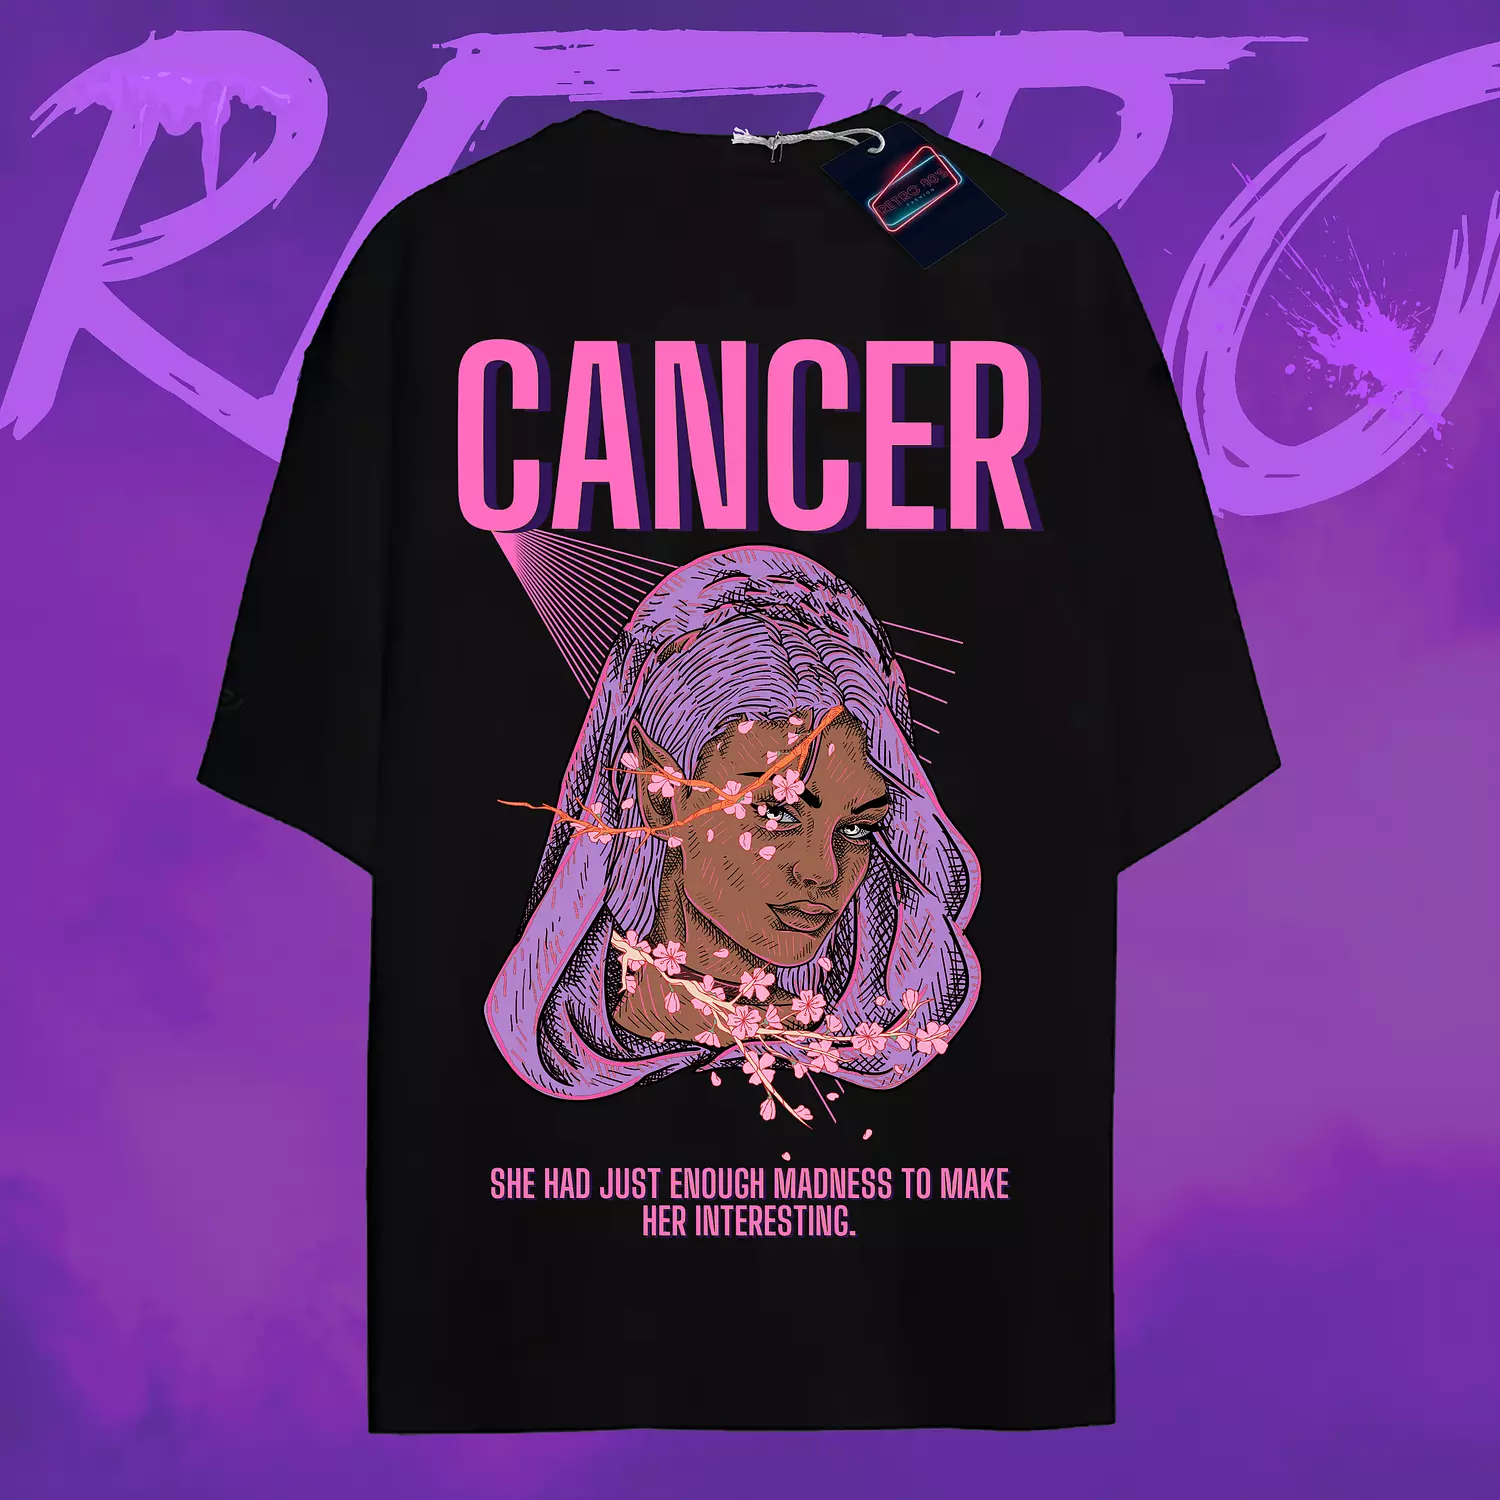 Cancer T-shirt hover image